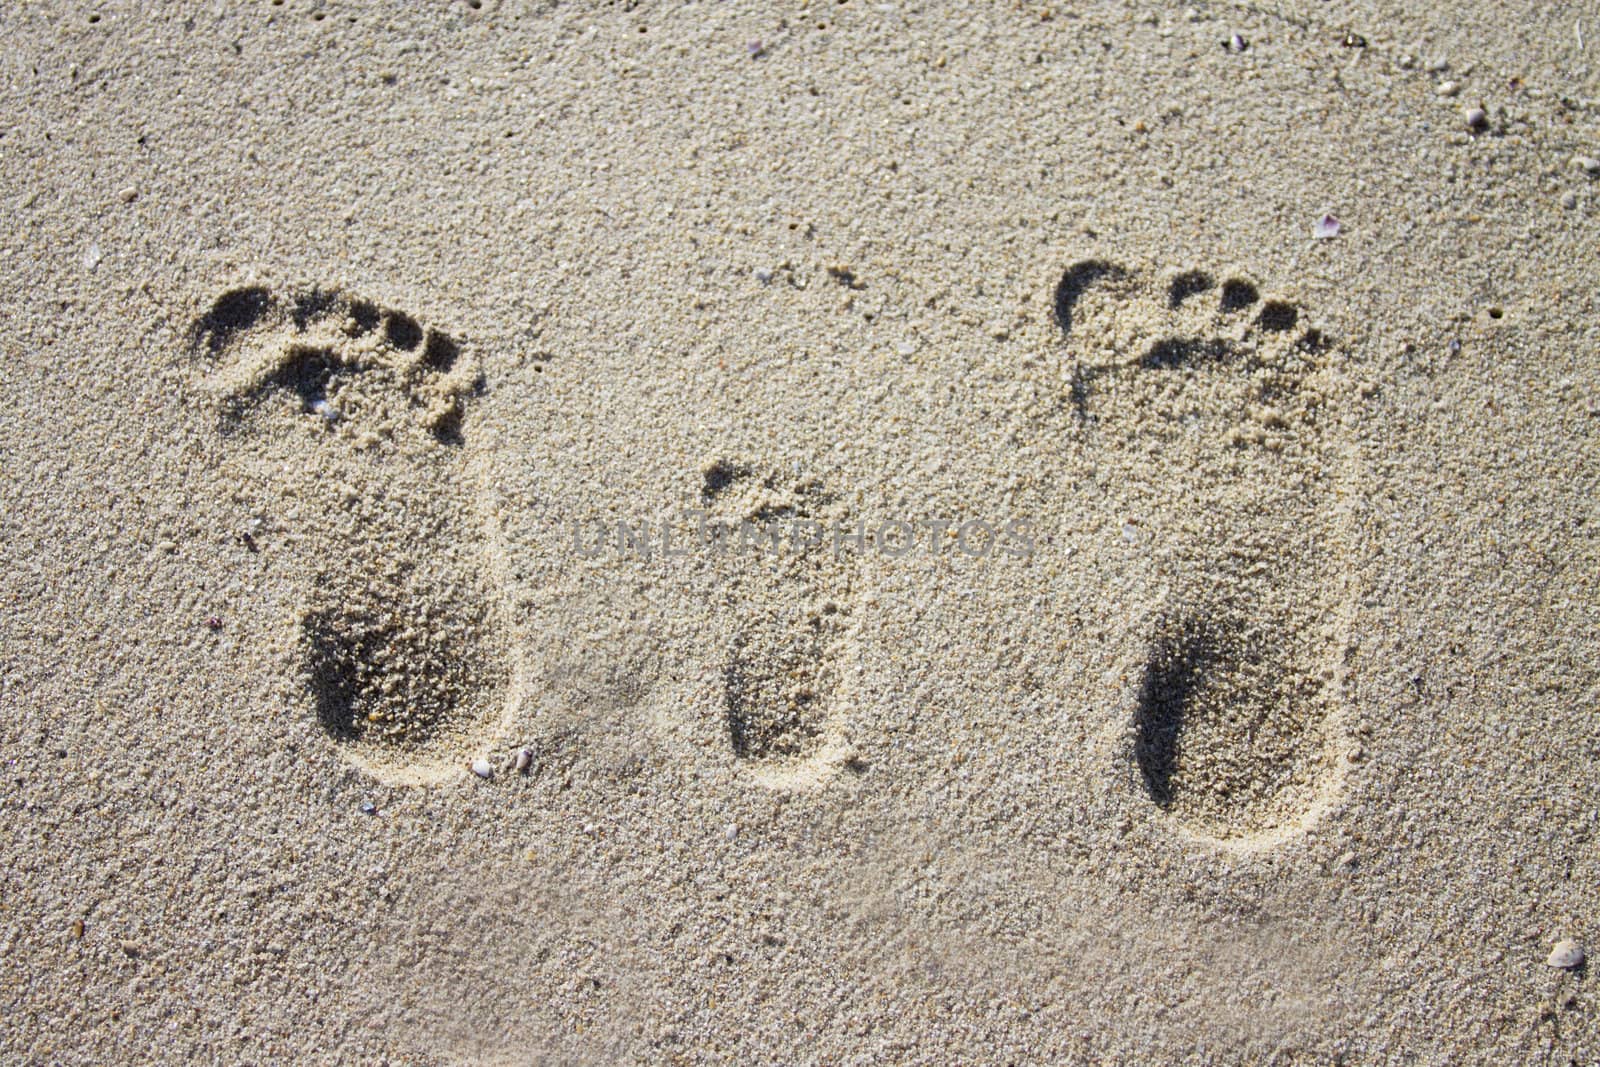 Three family footprints in sand on beach